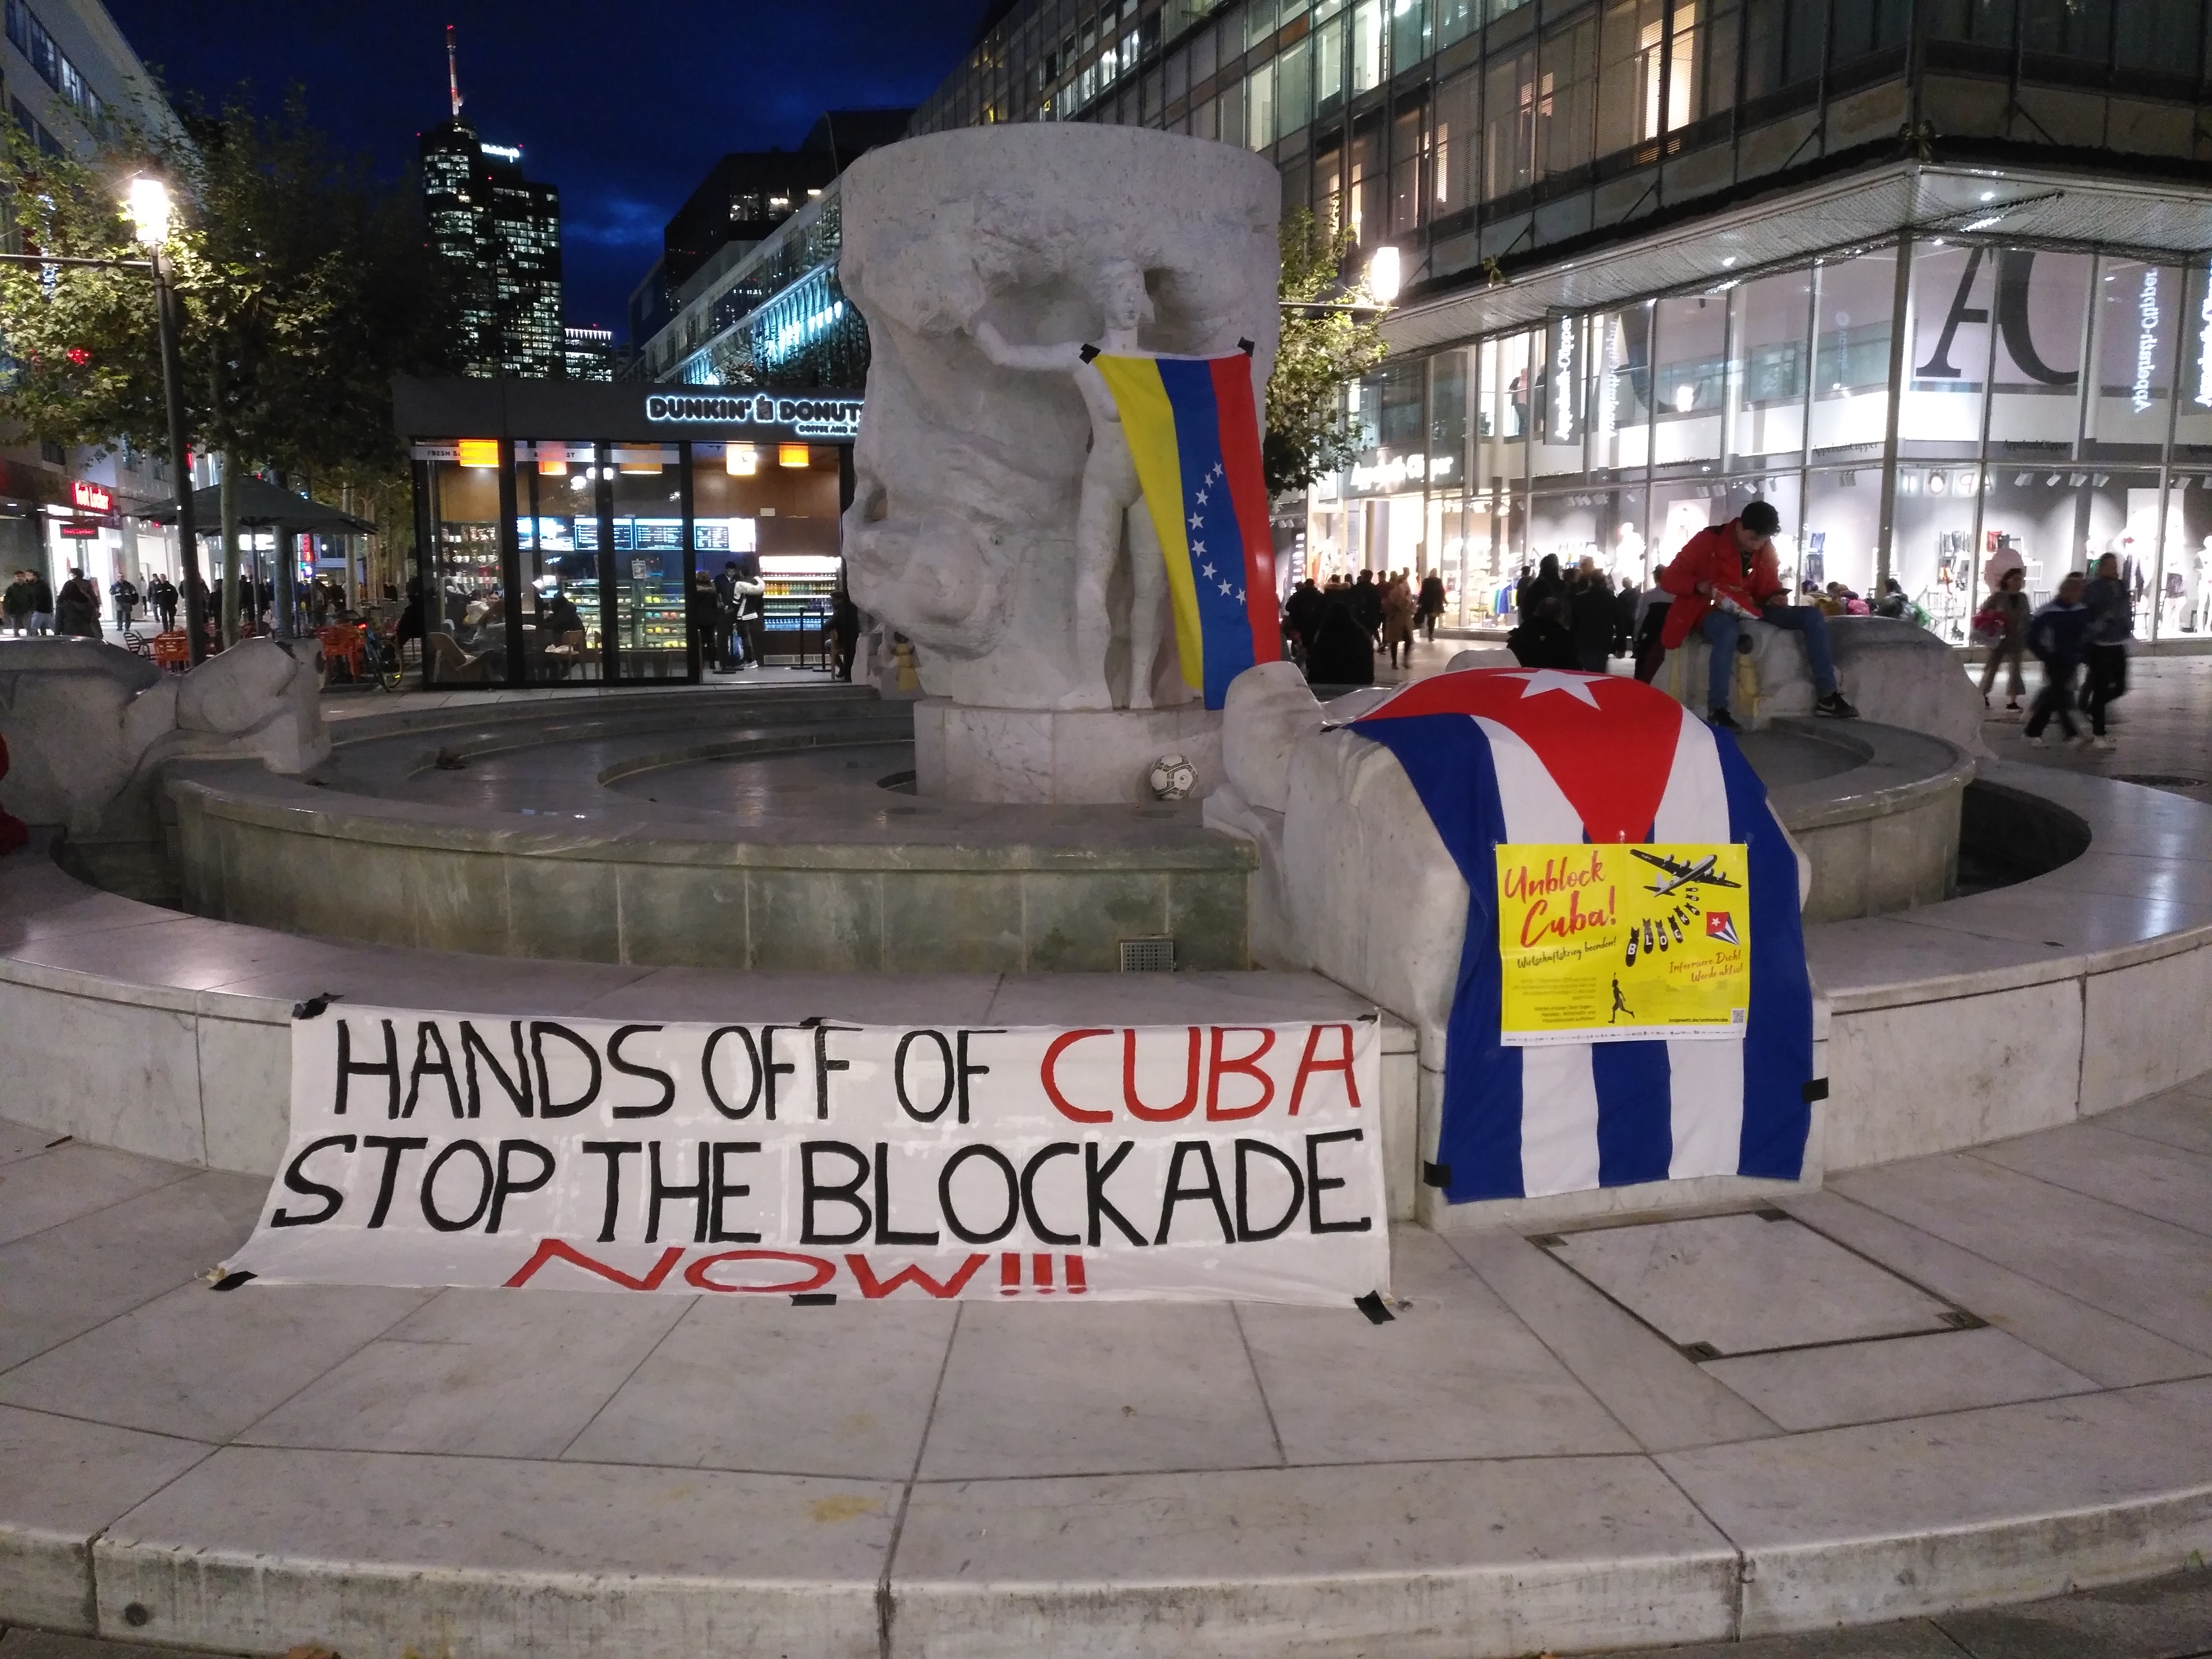 Unblock-Cuba-Aktion Frankfurt